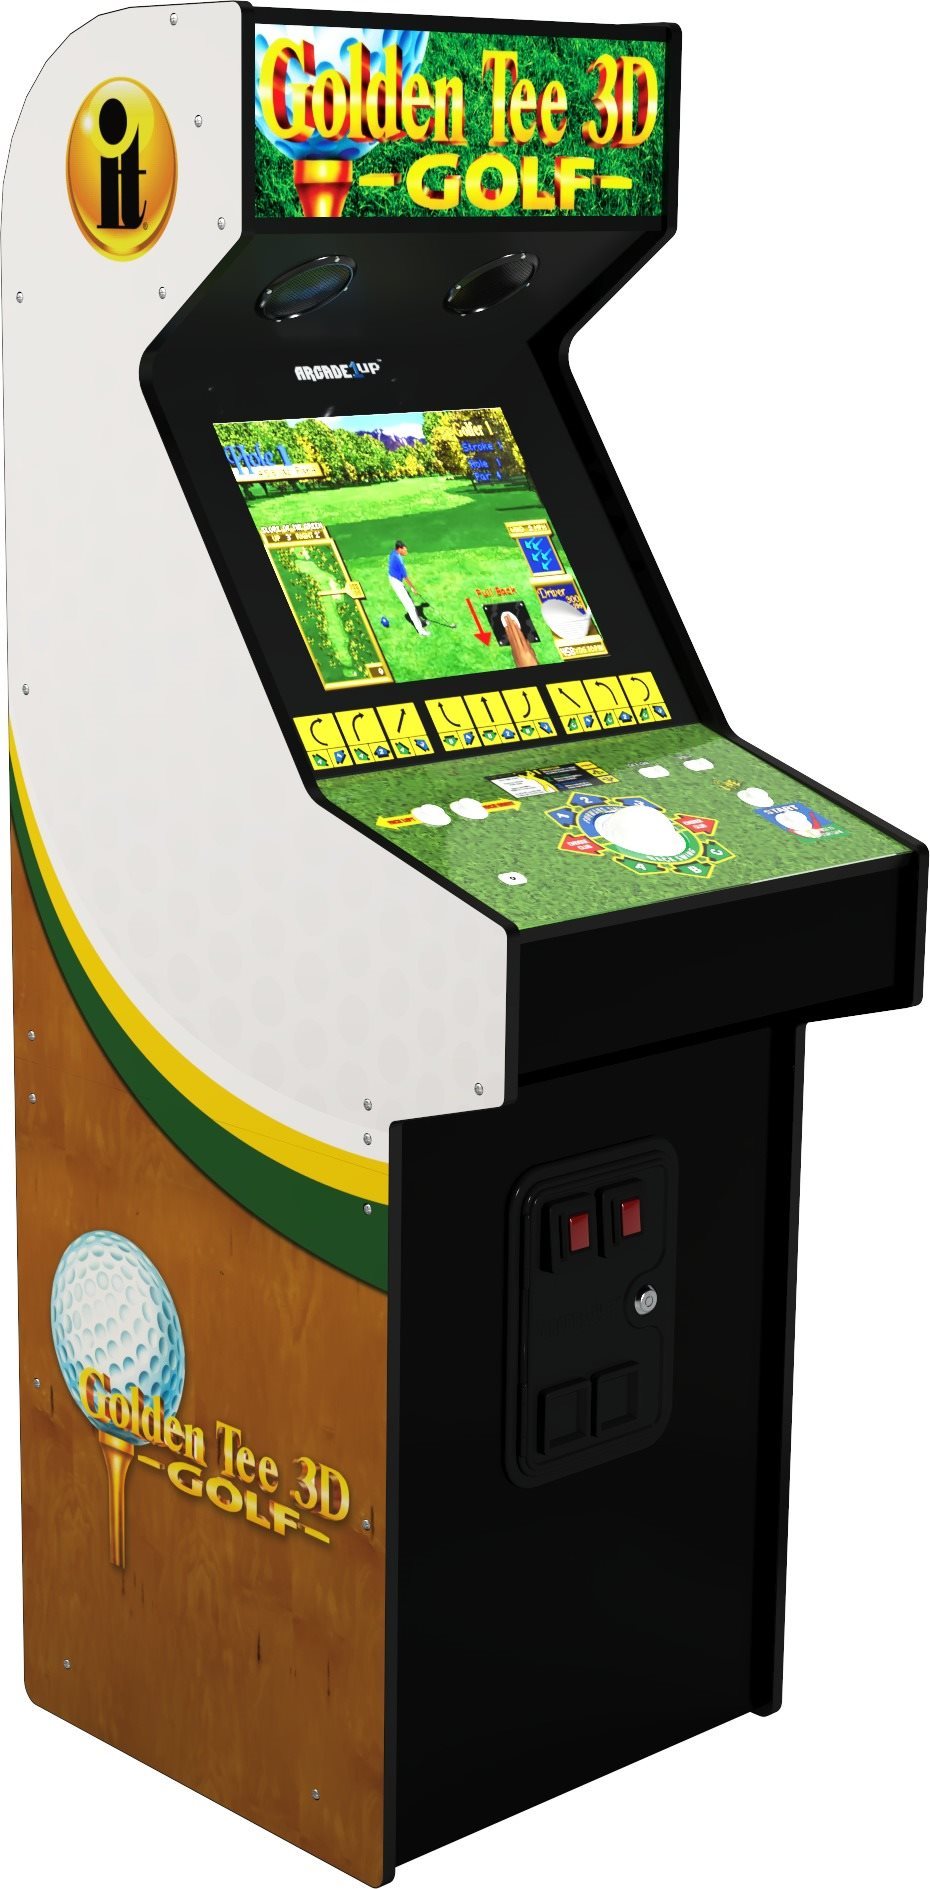 Retro játékkonzol Arcade1up Golden Tee 3D